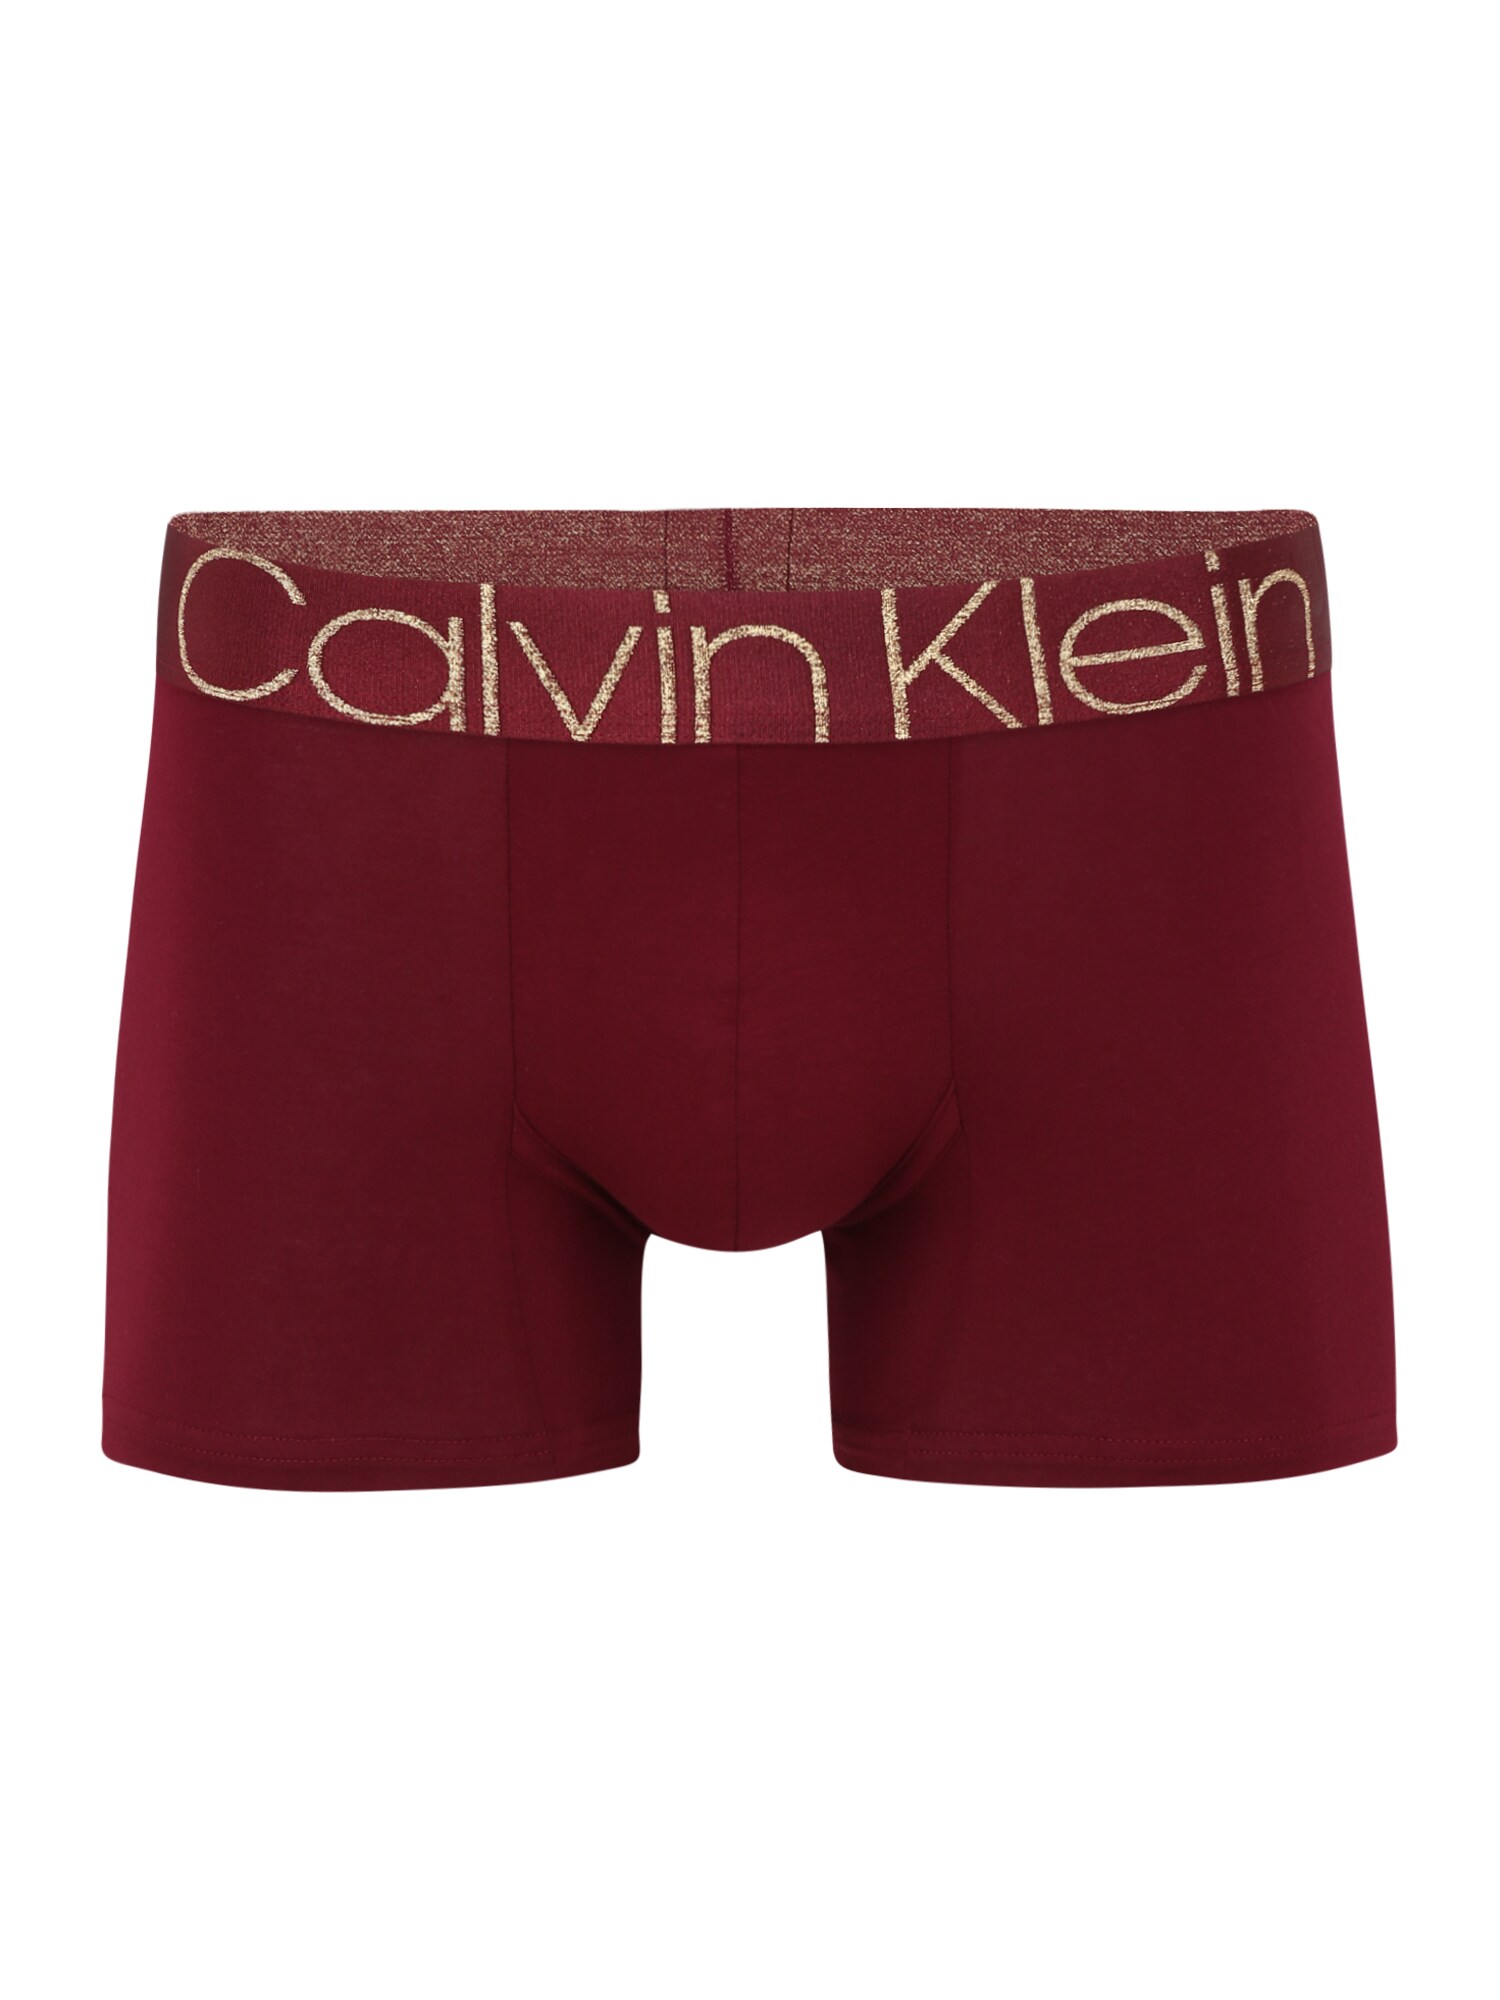 Calvin Klein Underwear Boxer trumpikės  tamsiai raudona / auksas